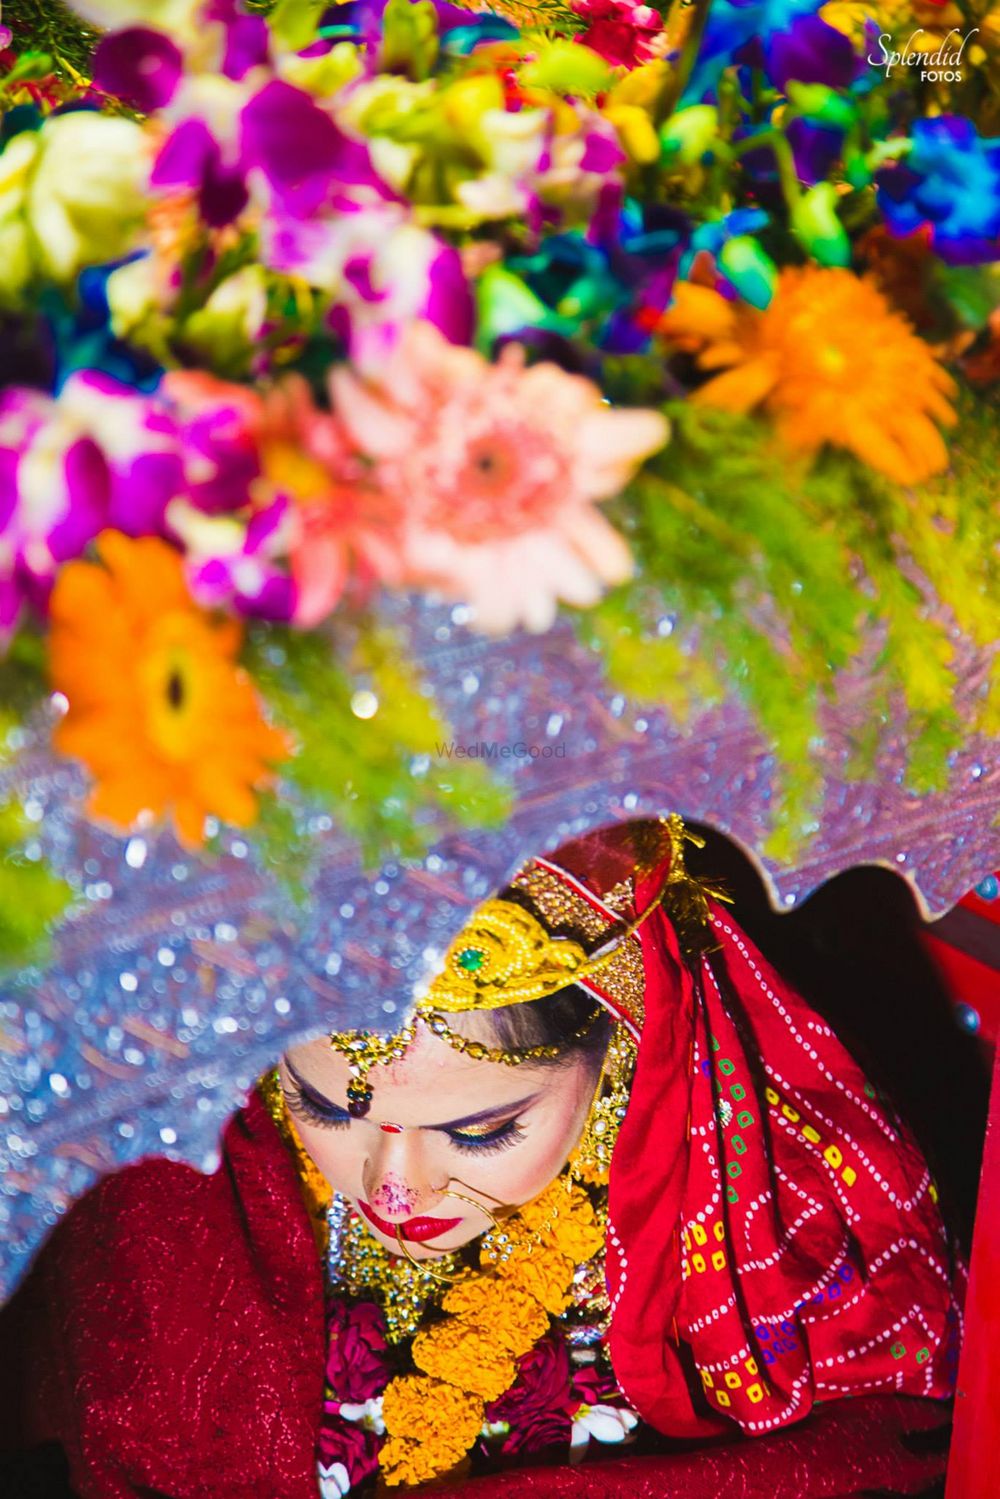 Photo From Splendid Brides - By SplendidFotos